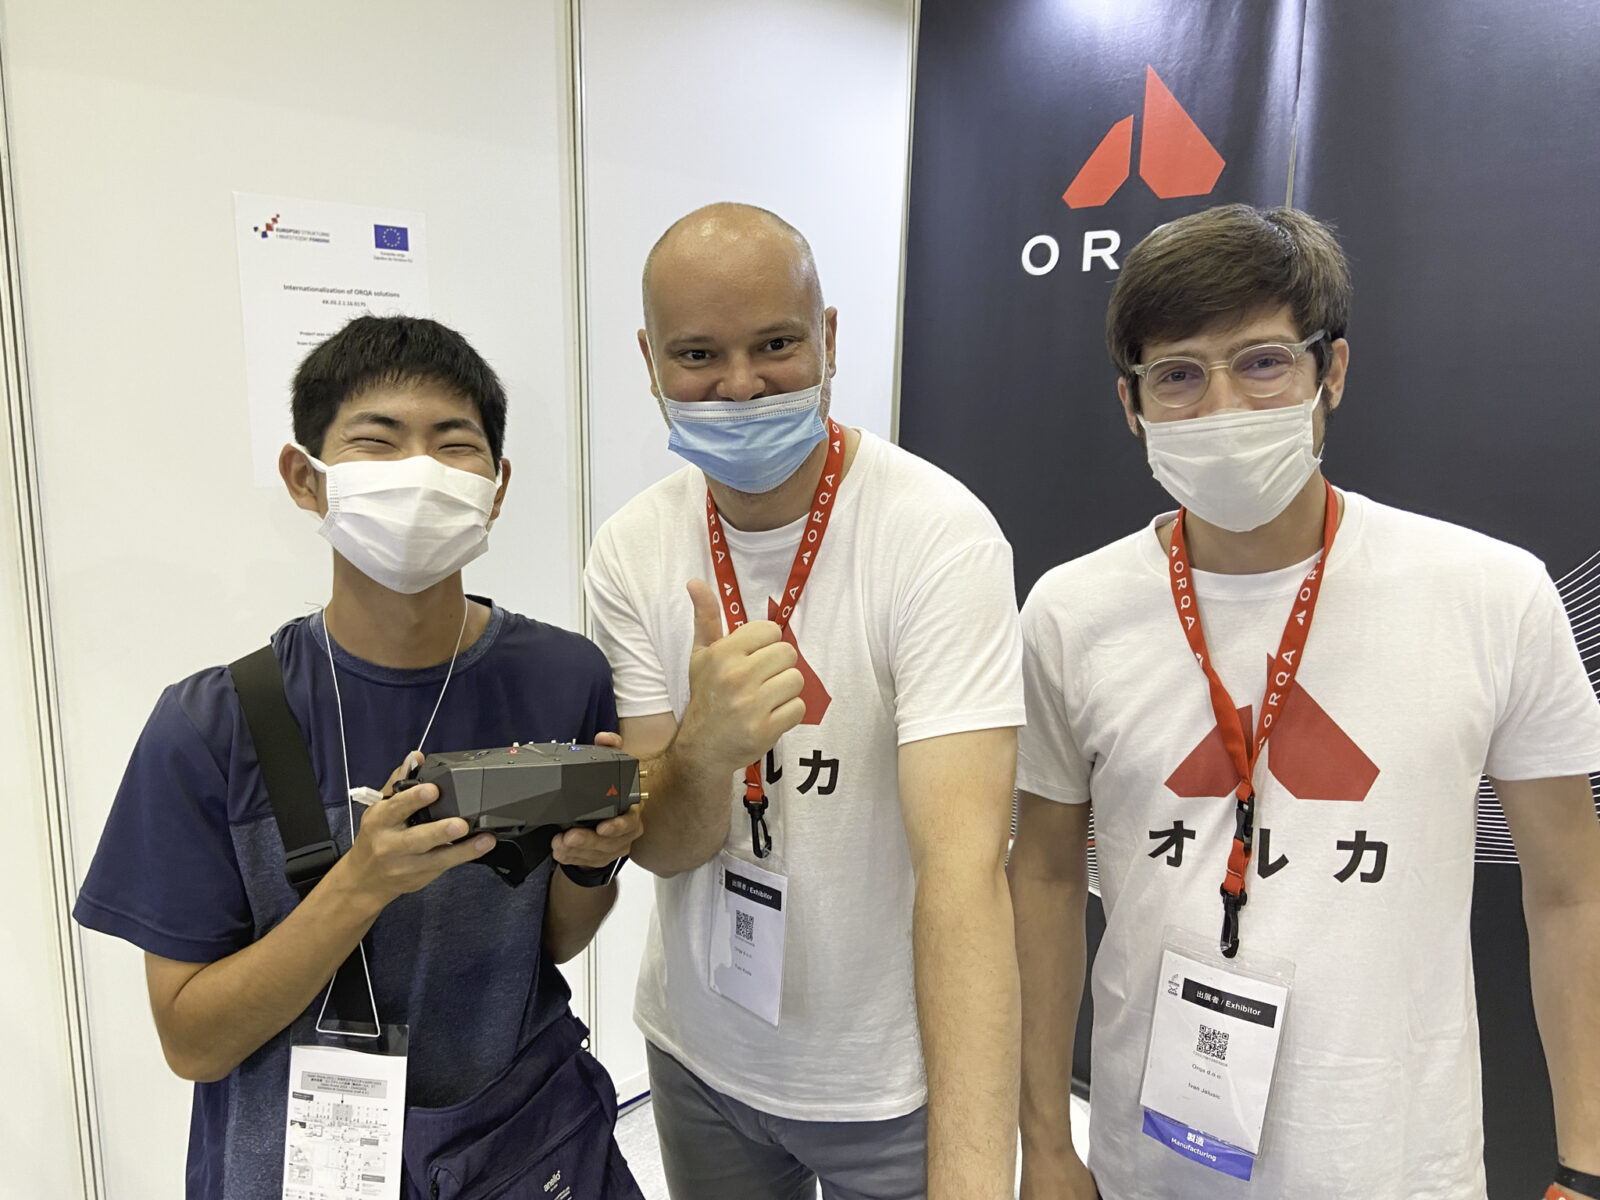 ORQA_Japan Drone_2022_Tomislav Krolo_Ivan Jelušić